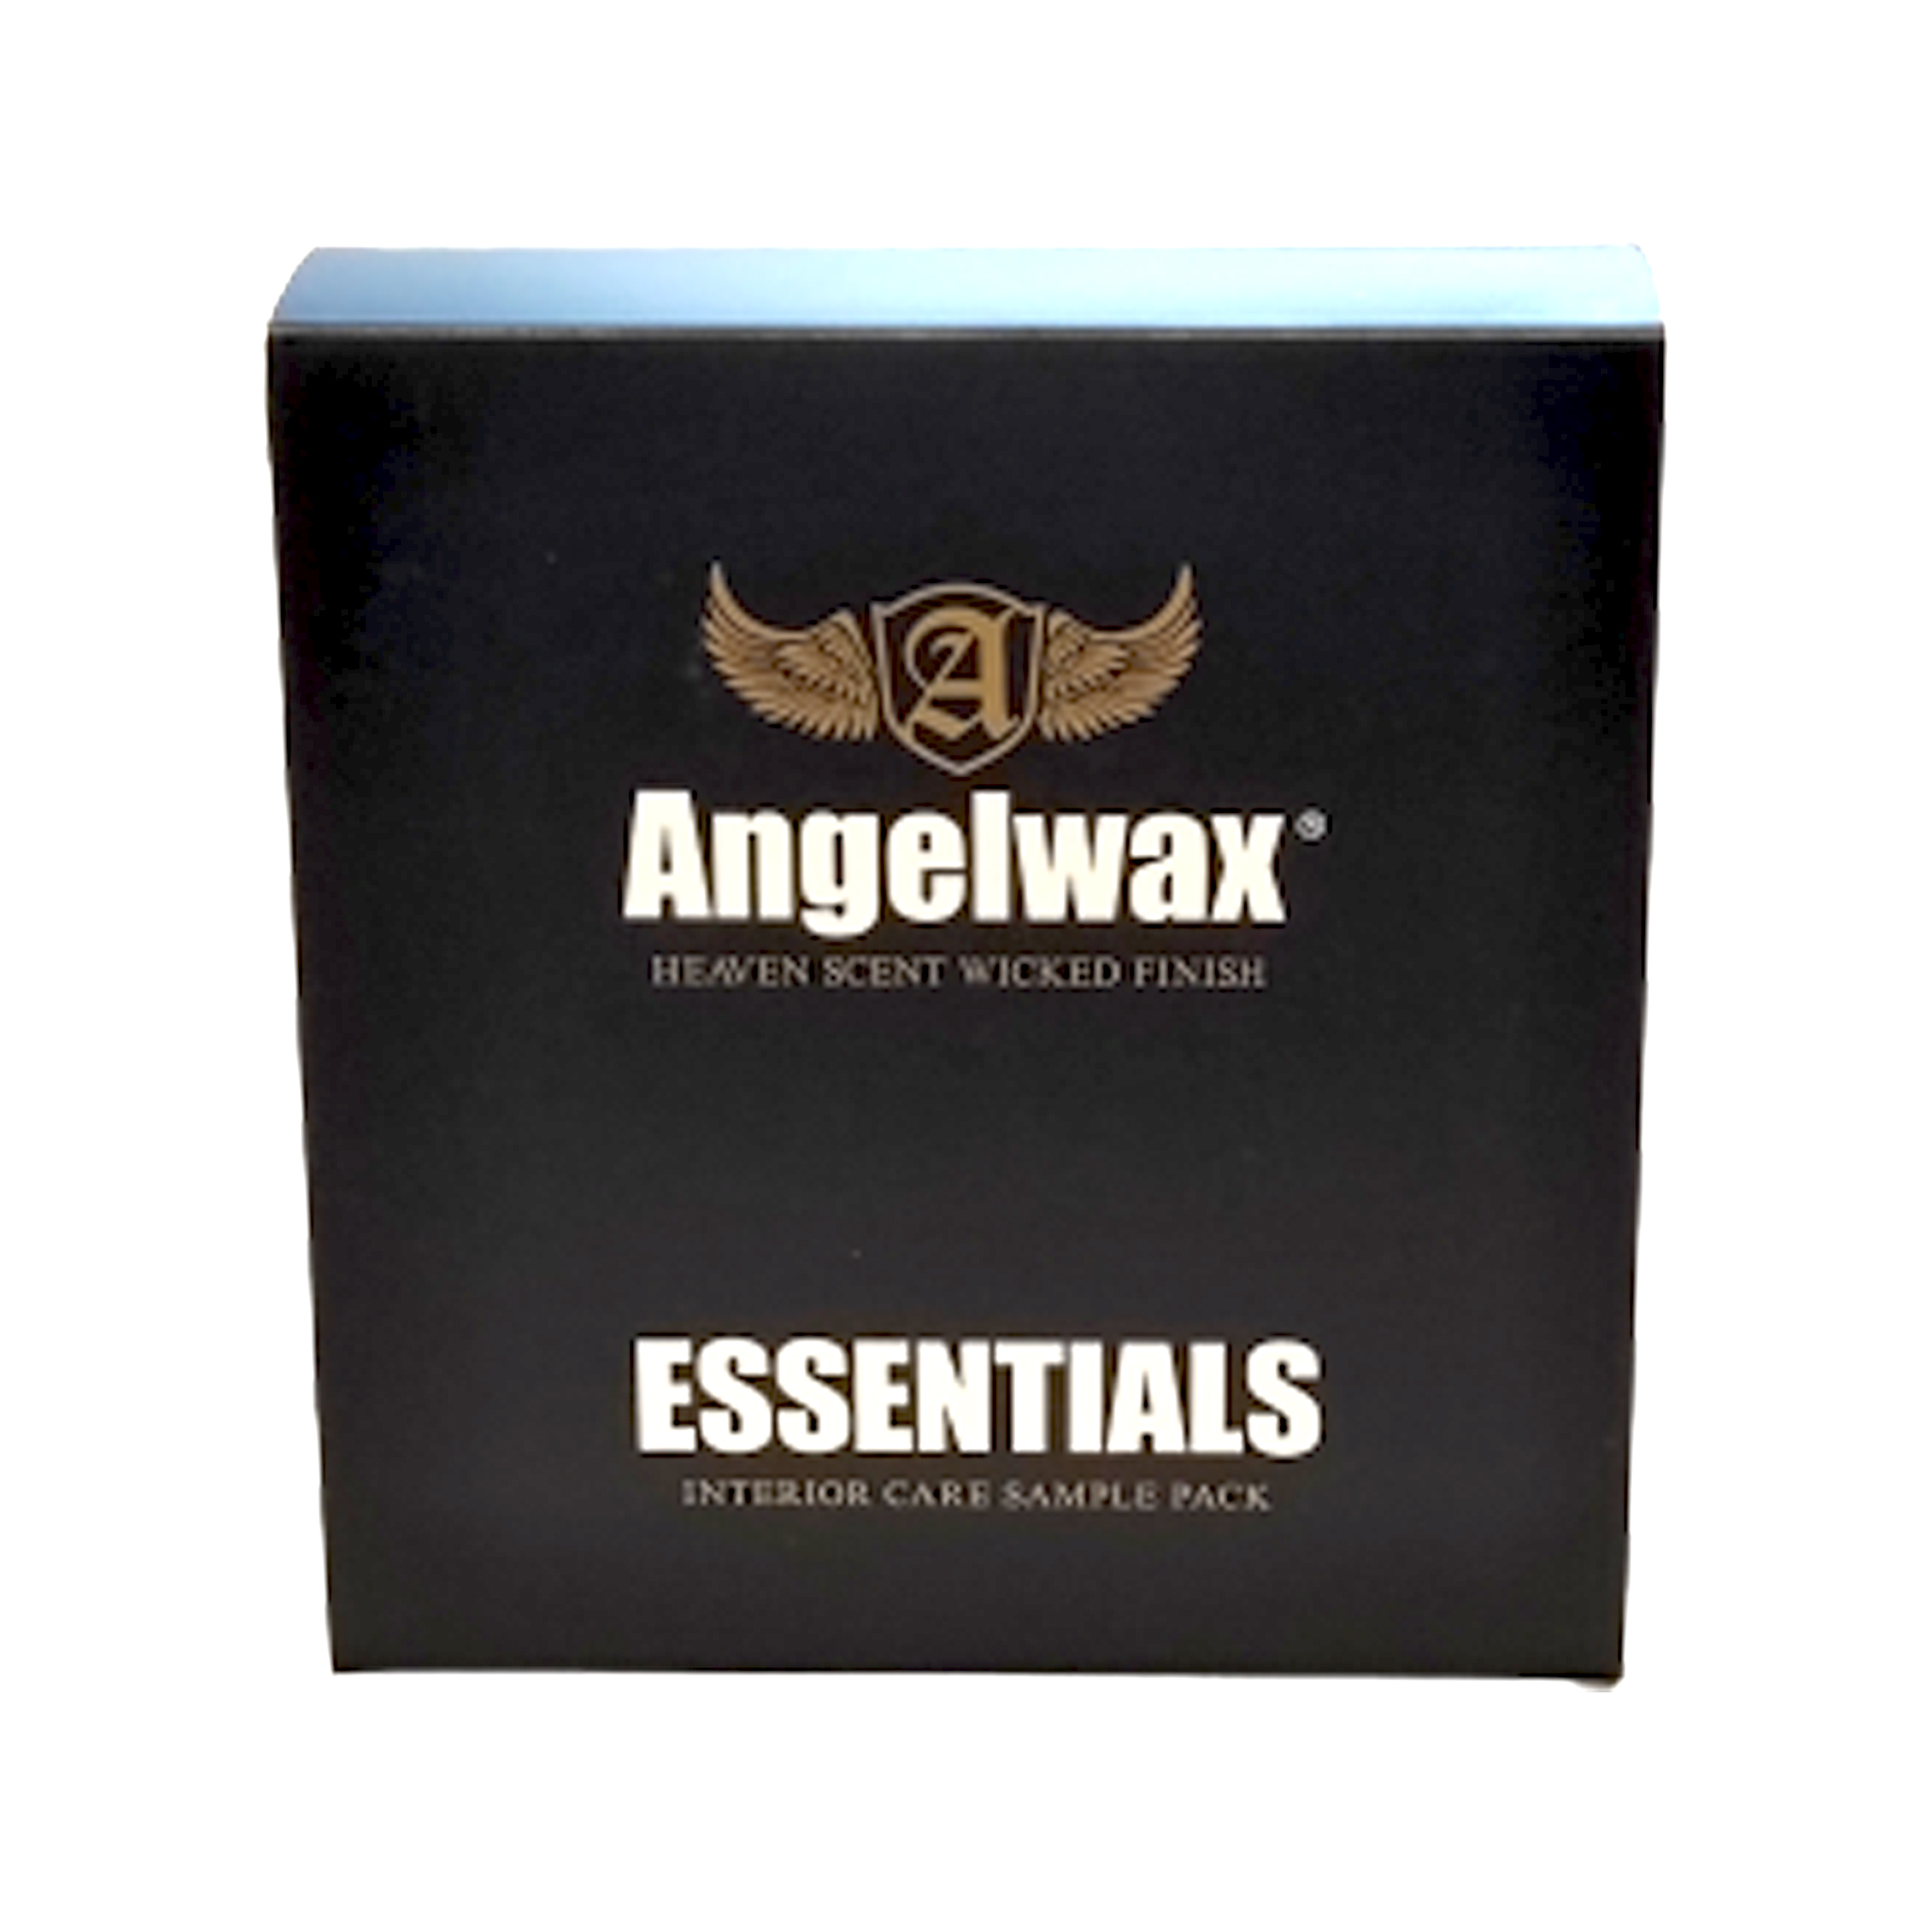 Angelwax Essentials Interior Care Sample Pack